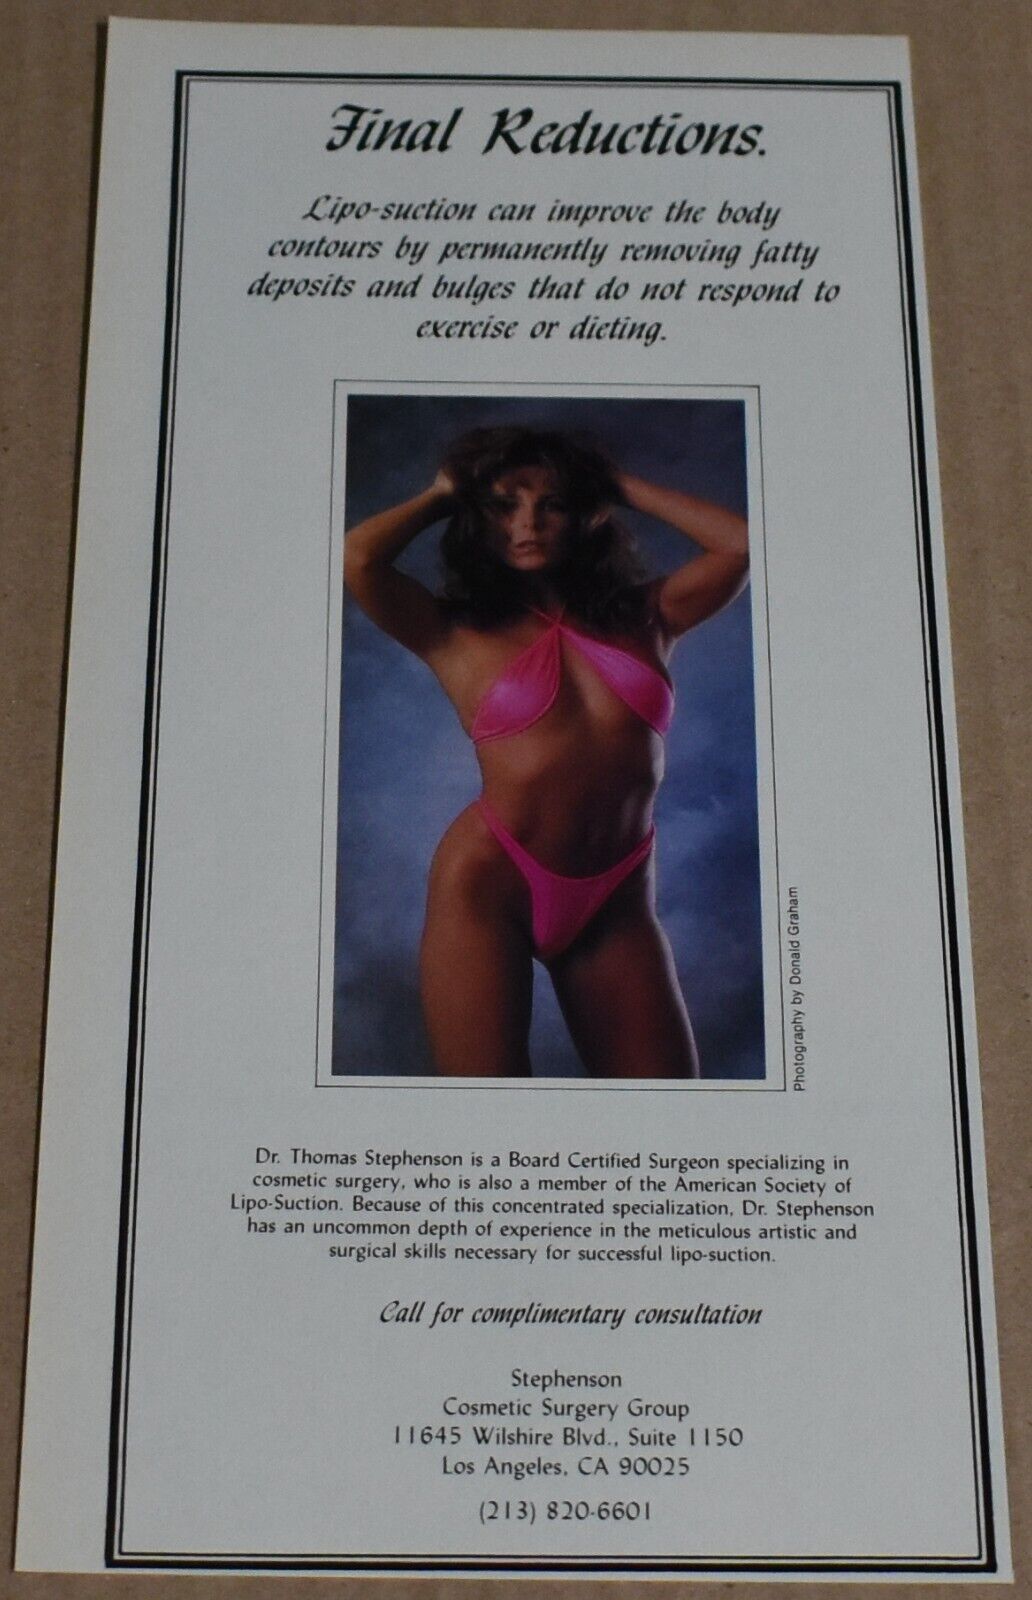 1988 Print Ad Final Reductions Cosmetic Surgery Group bikini pinup girl art sexy